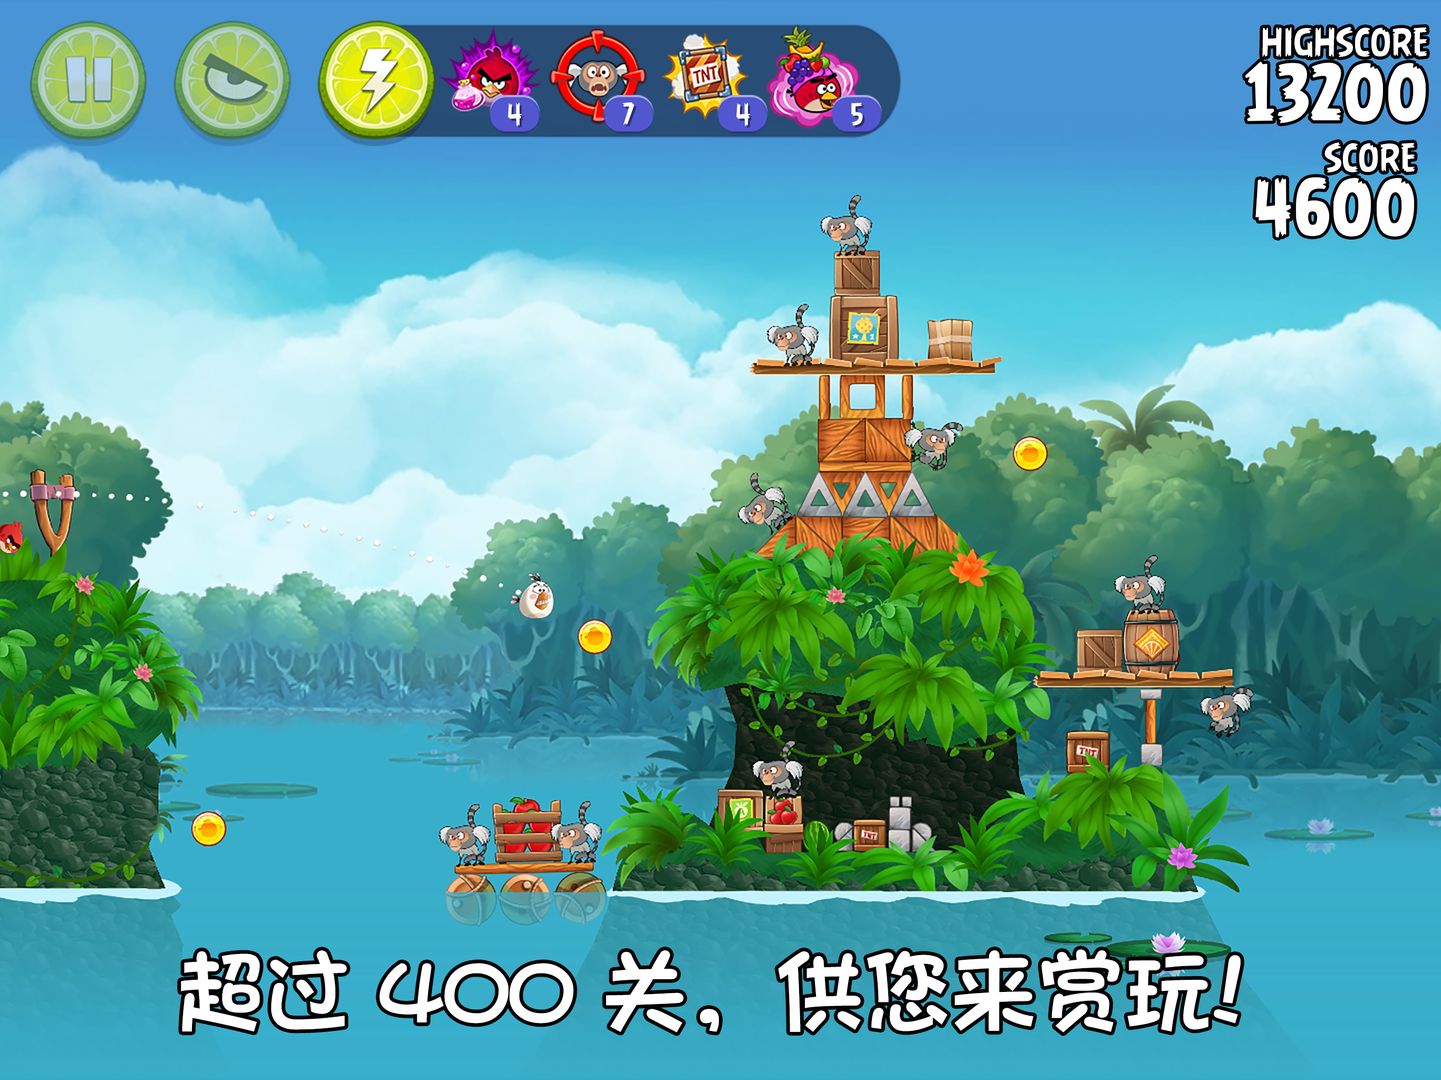 Screenshot of Angry Birds Rio